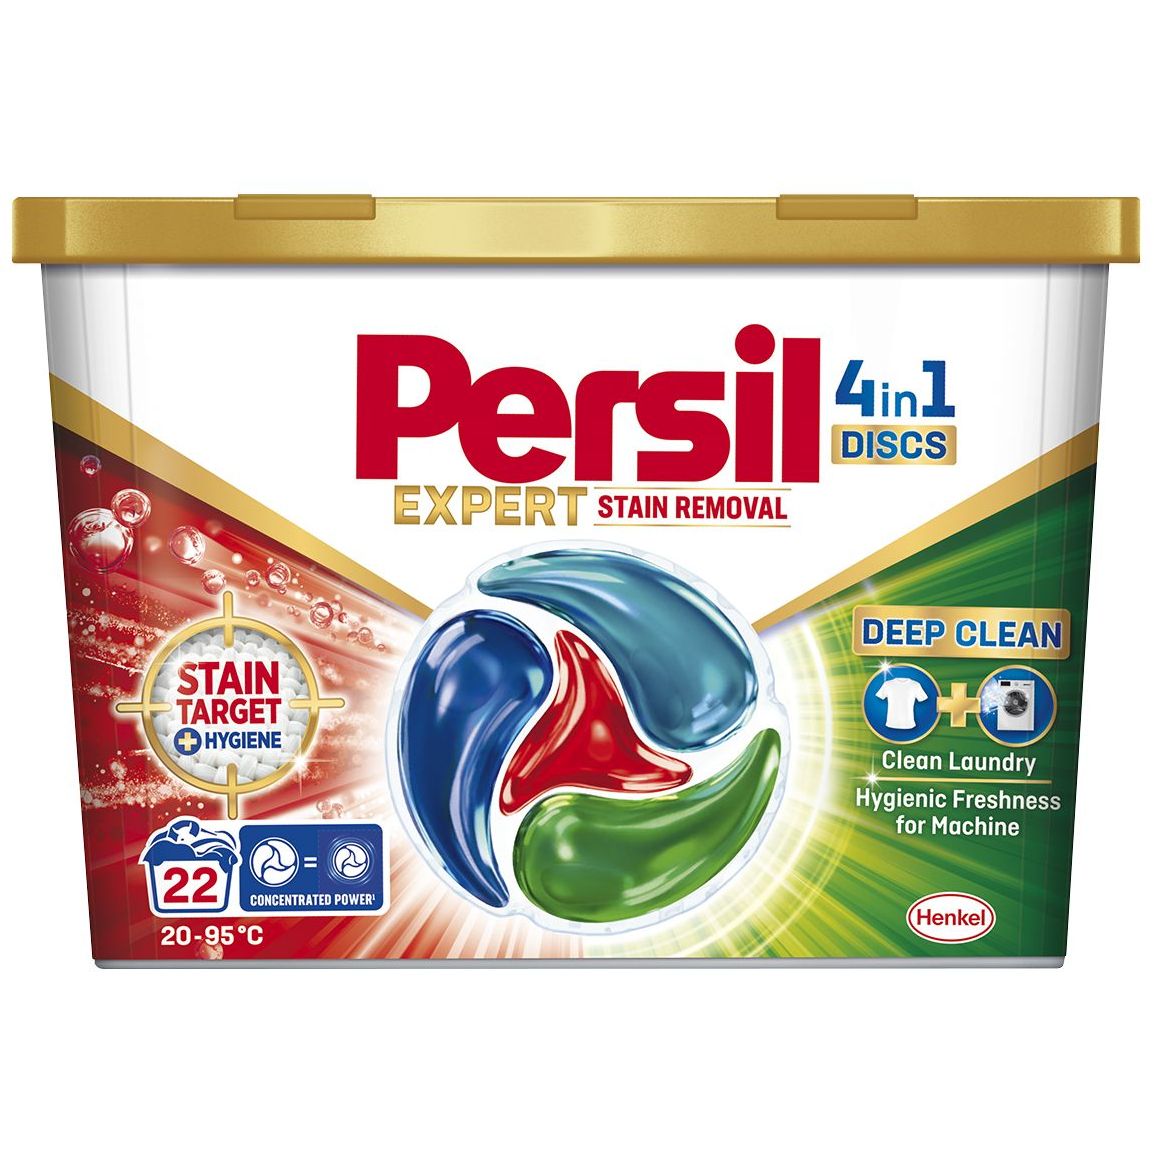 Диски для прання Persil Expert Deep Clean Stain Removal 4 in 1 Discs 22 шт. - фото 1